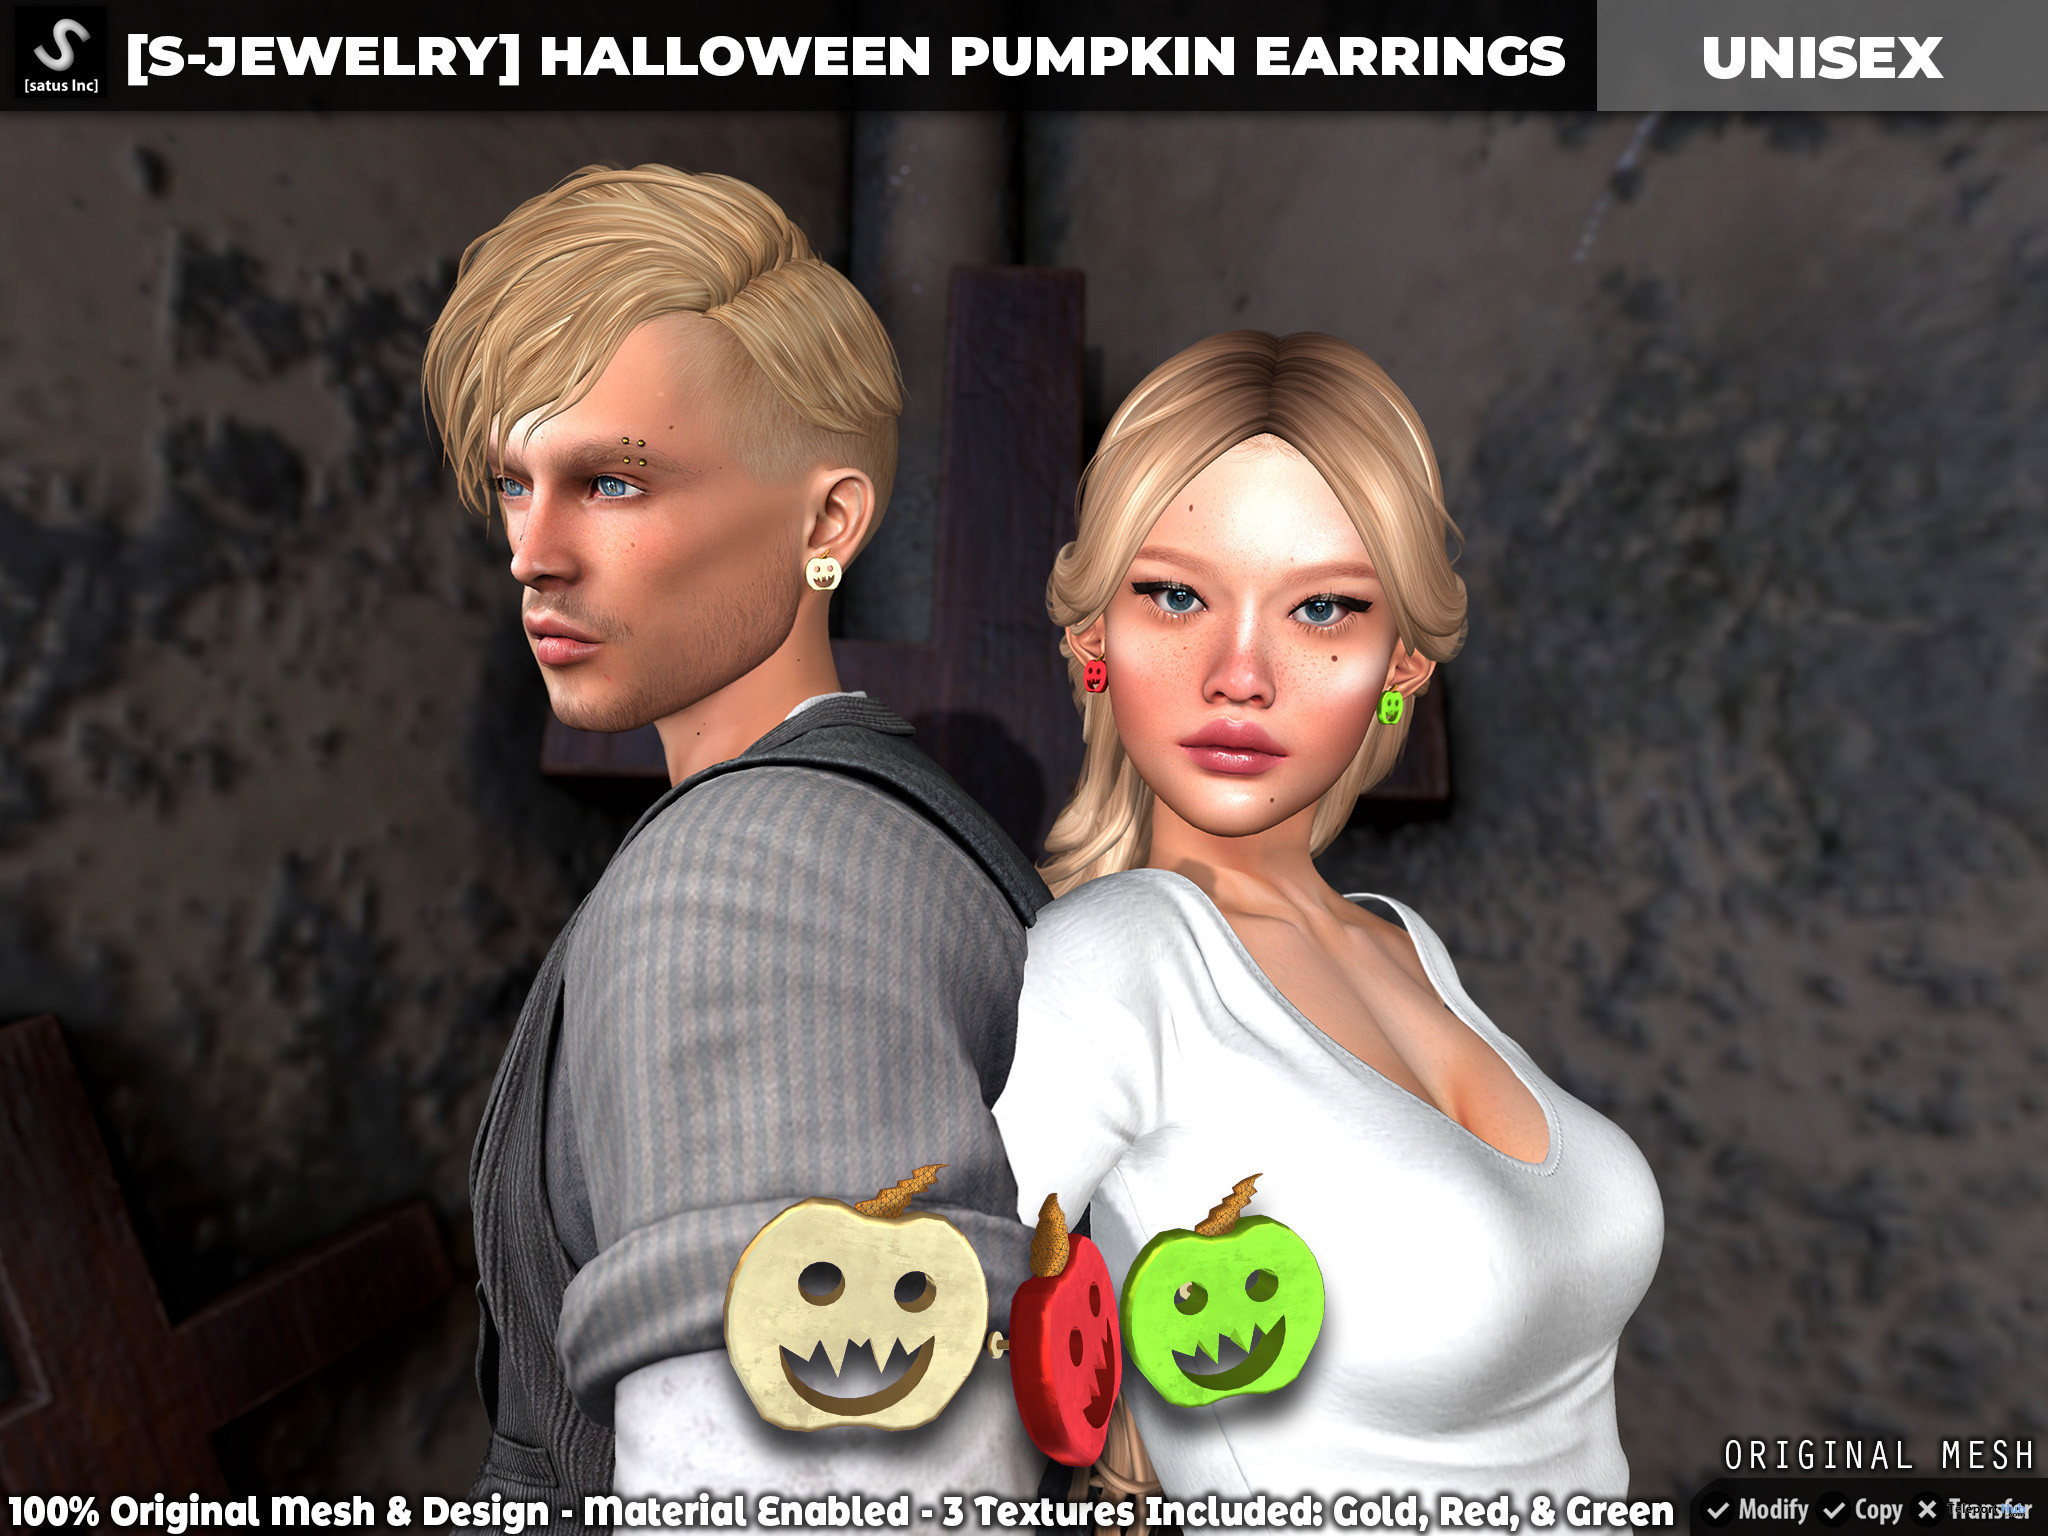 [S-Jewelry] Halloween Pumpkin Earrings Unisex Group Gift by [satus Inc] - Teleport Hub - teleporthub.com